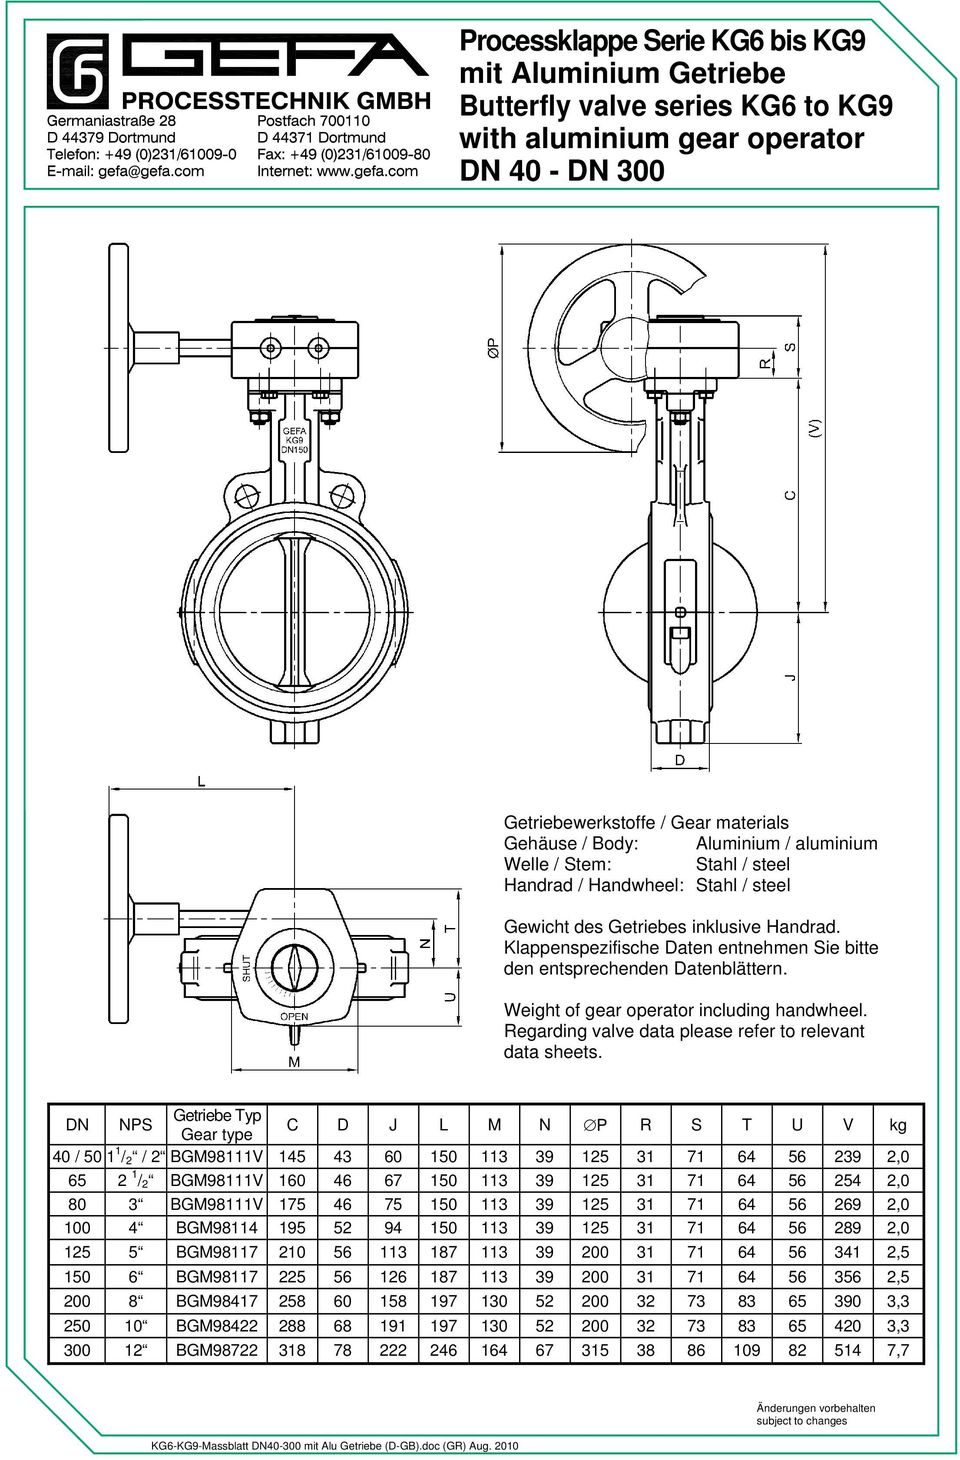 Weight of gear operator including handwheel. Regarding valve data please refer to relevant data sheets.